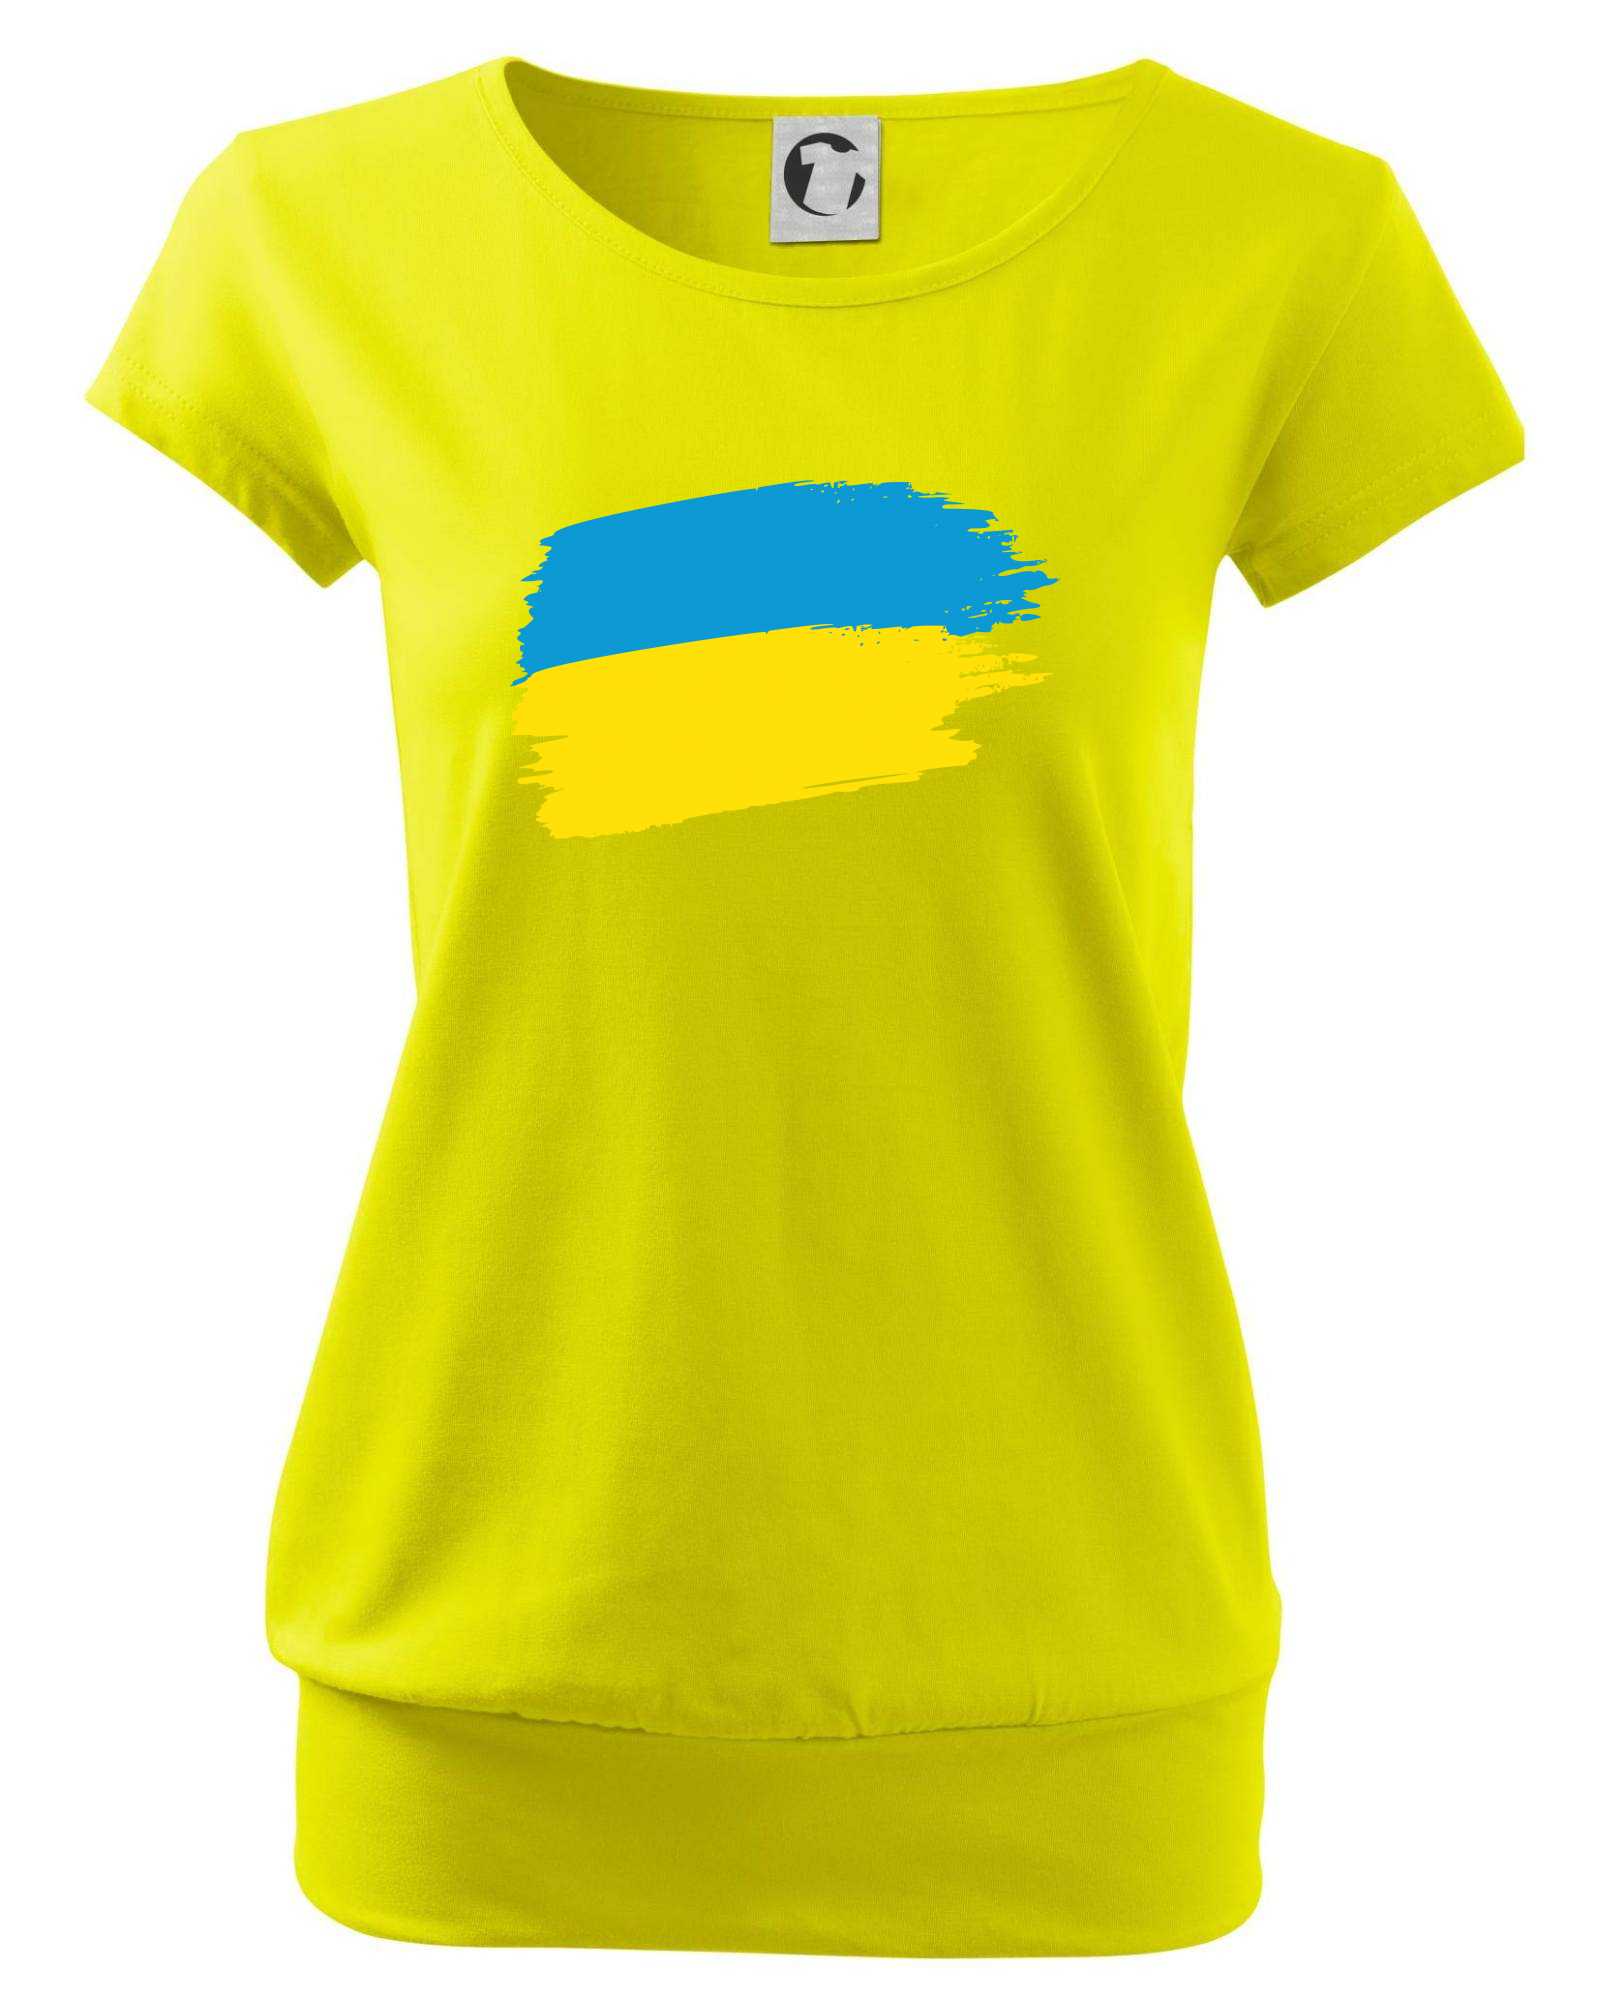 Ukrajinské tričko - Volné triko city